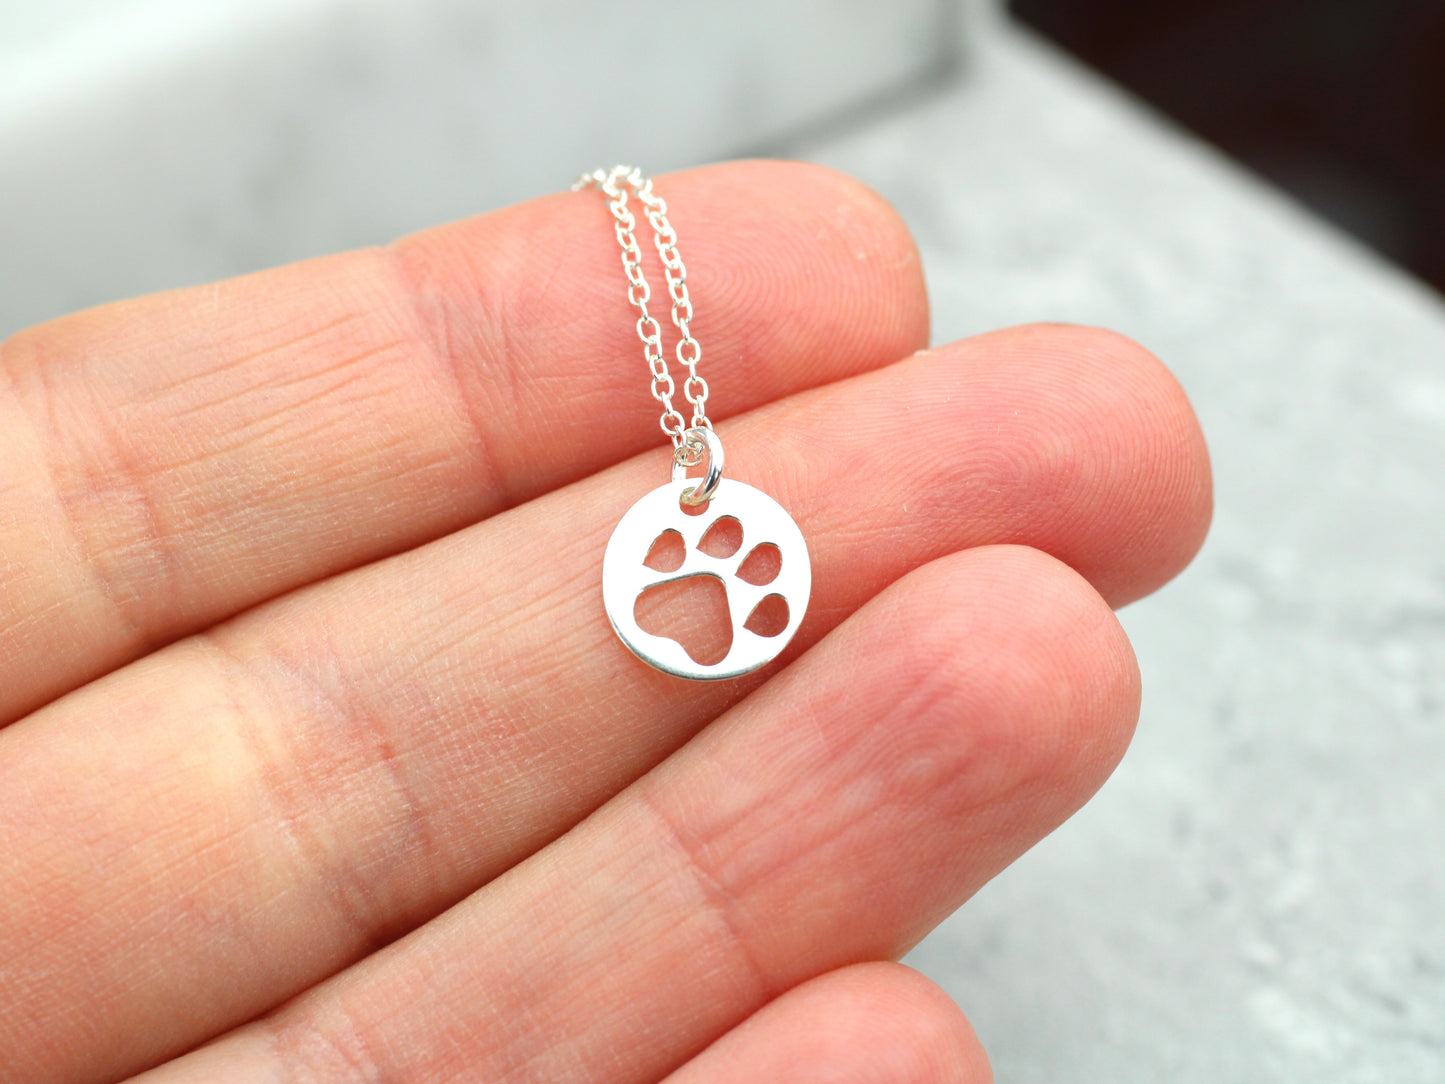 Dog paw print necklace.